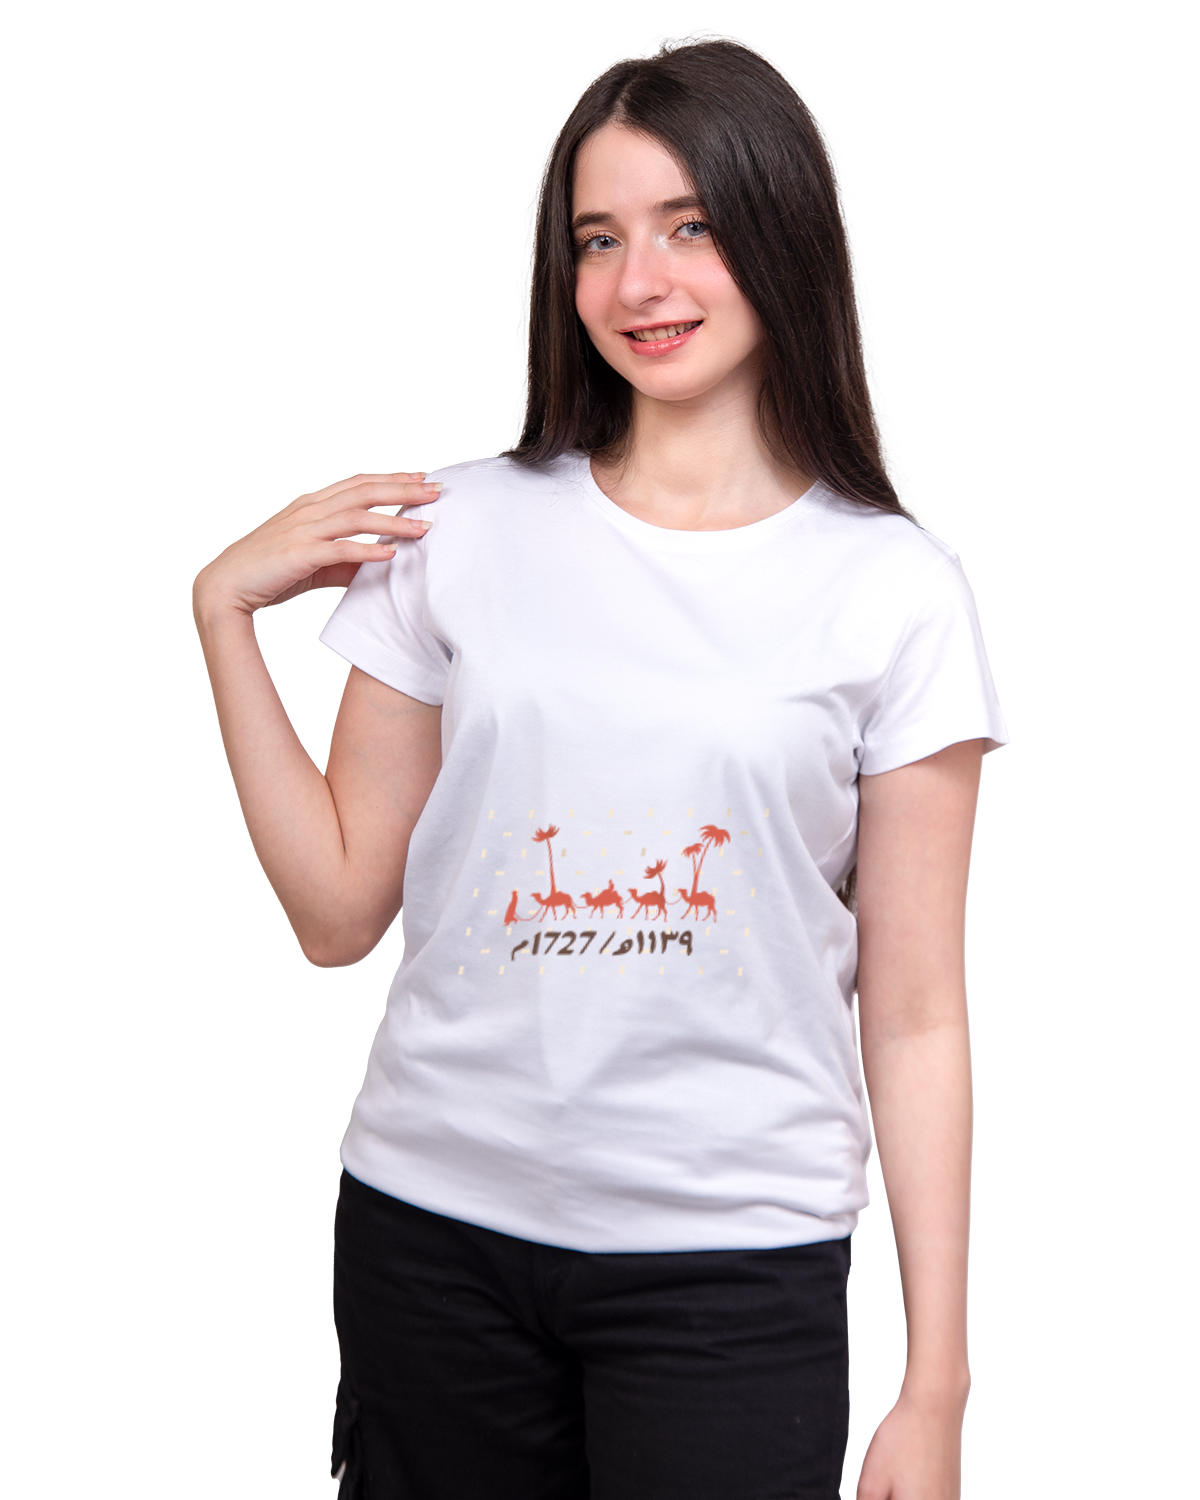 Women's Foundation Day T-shirt (1139 AH/1727 AD)